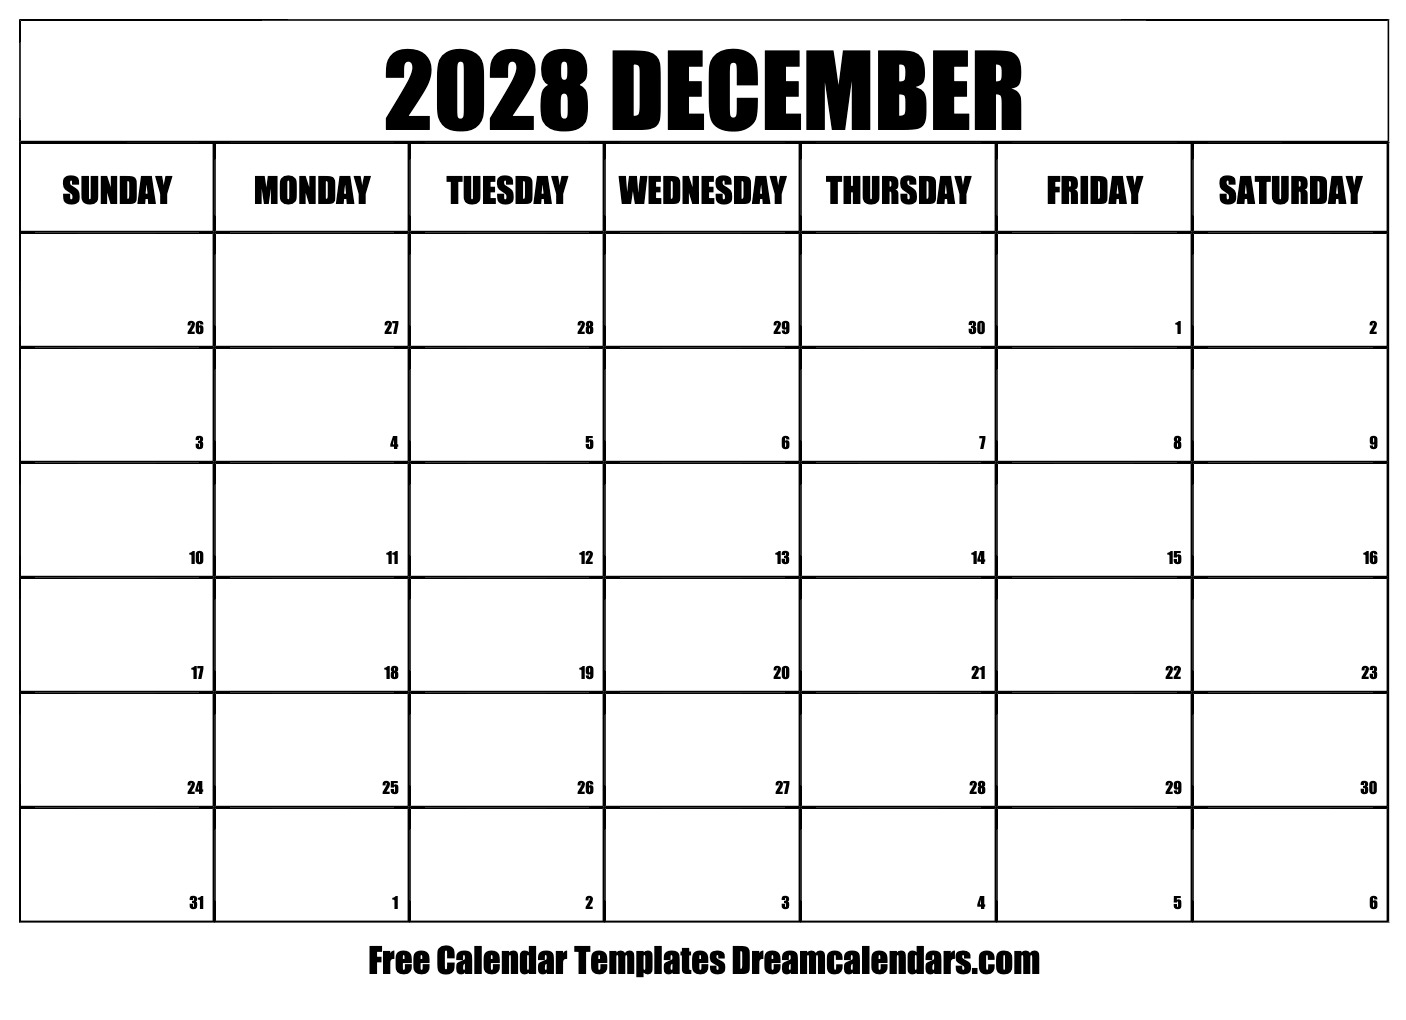 December 2028 Calendar Free Blank Printable With Holidays